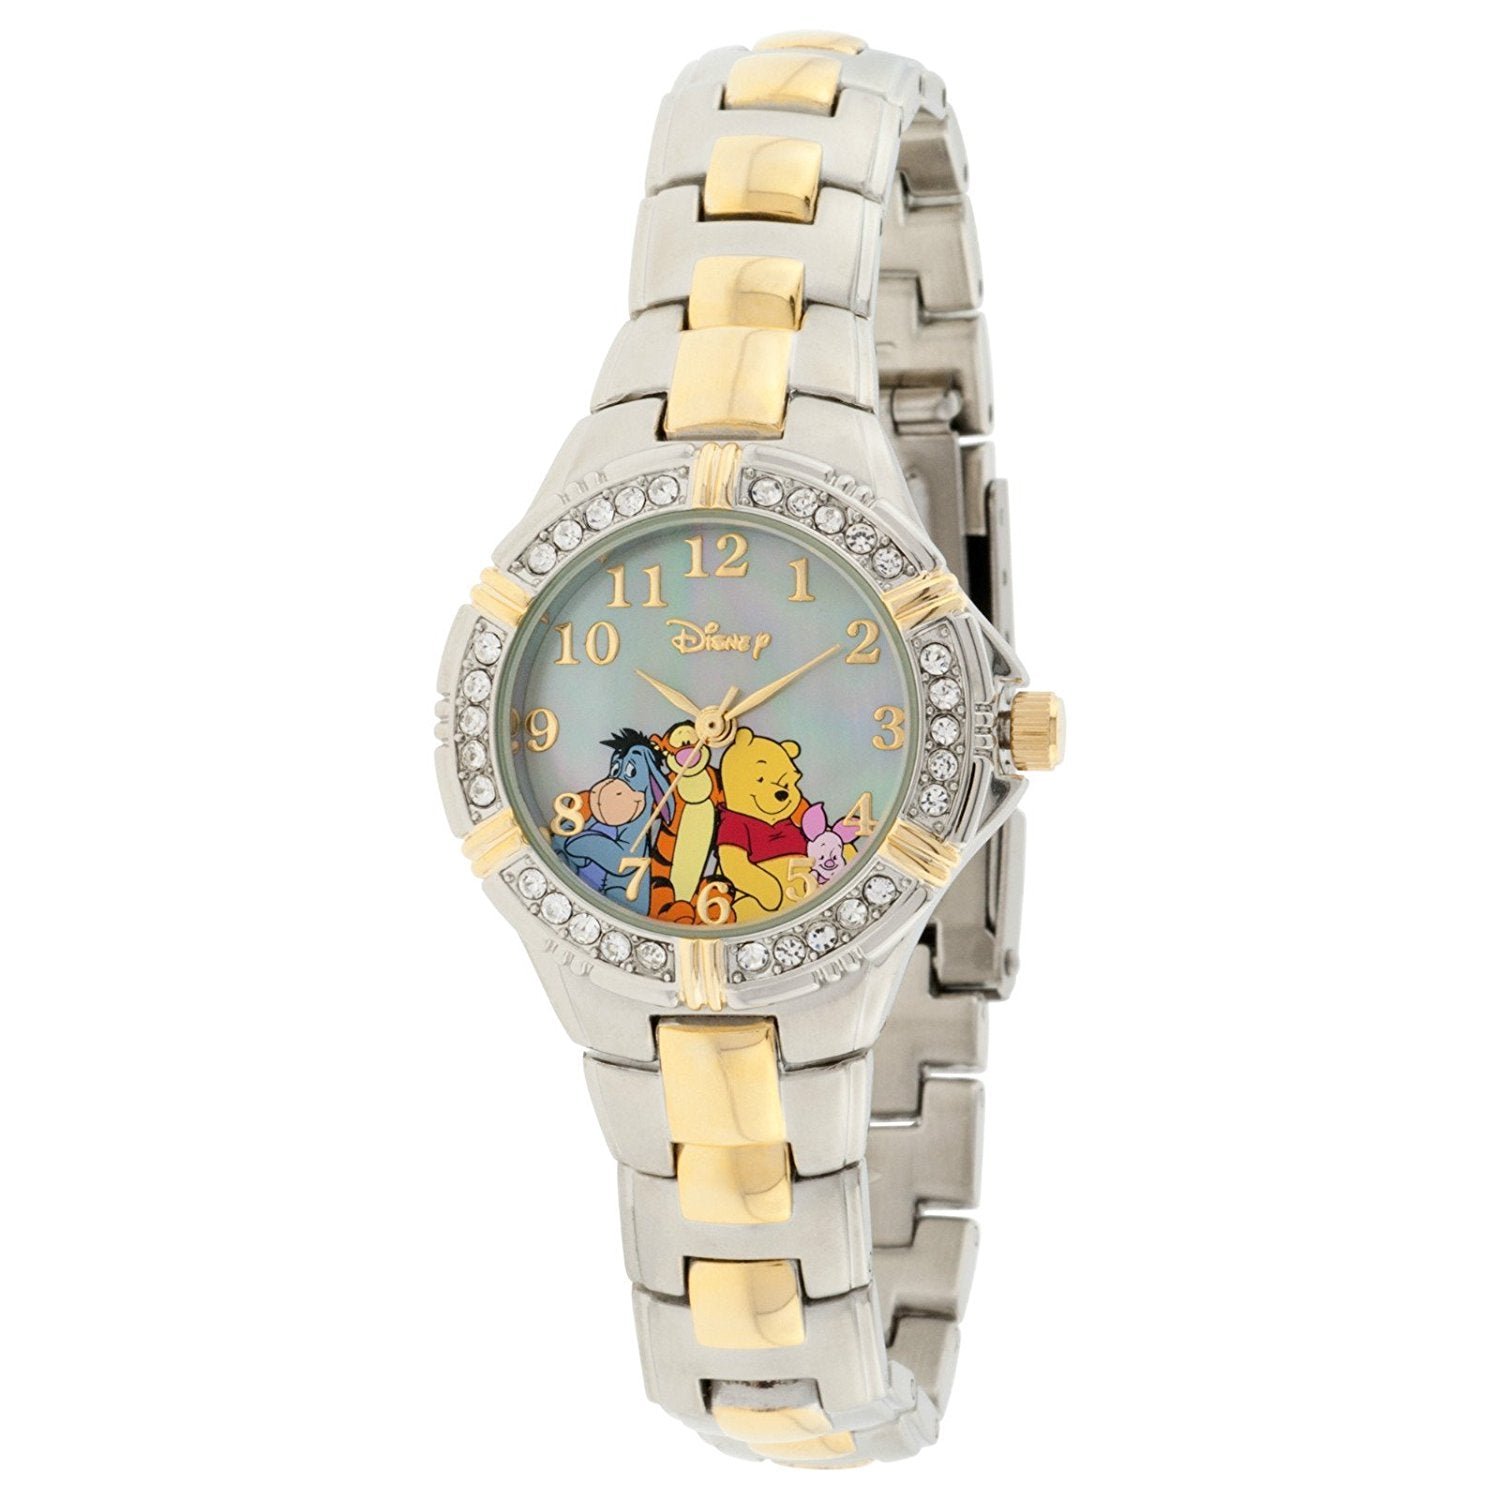 Model: Disney Winnie the Pooh and Friends Two-Tone Bracelet Watch